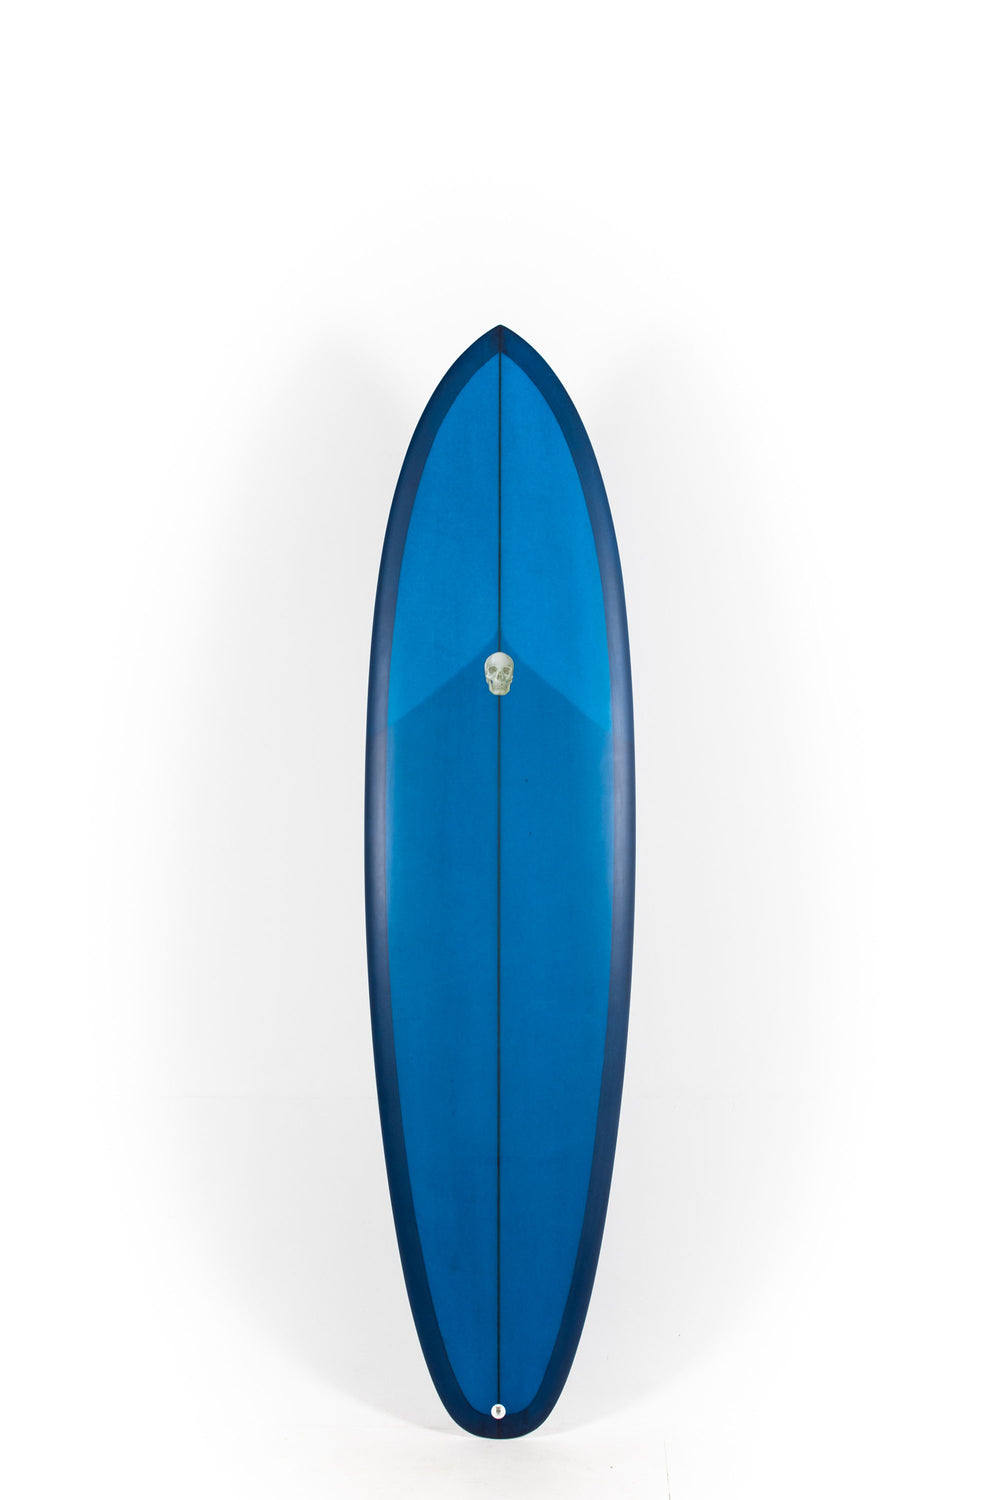 Pukas Surf Shop - Copia de Christenson Surfboards - TWIN TRACKER - 7'2